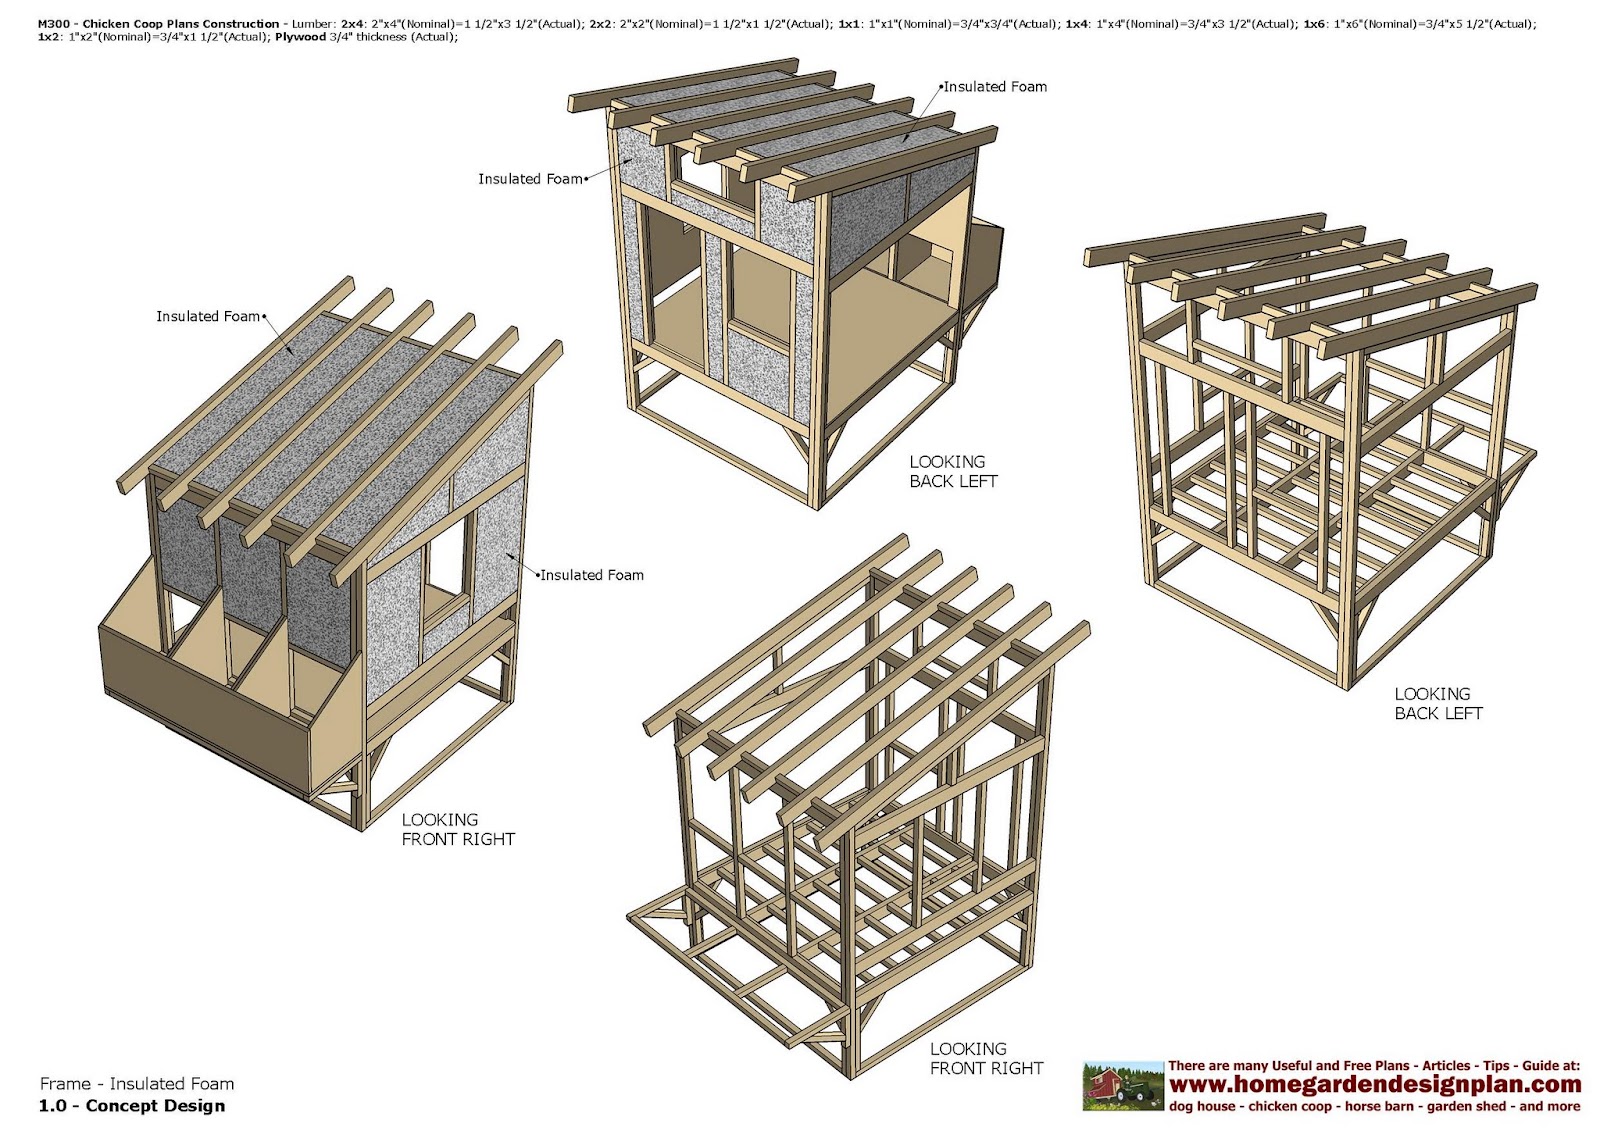 M300 _ Chicken Coop Plans Construction - Chicken Coop Design - How To ...